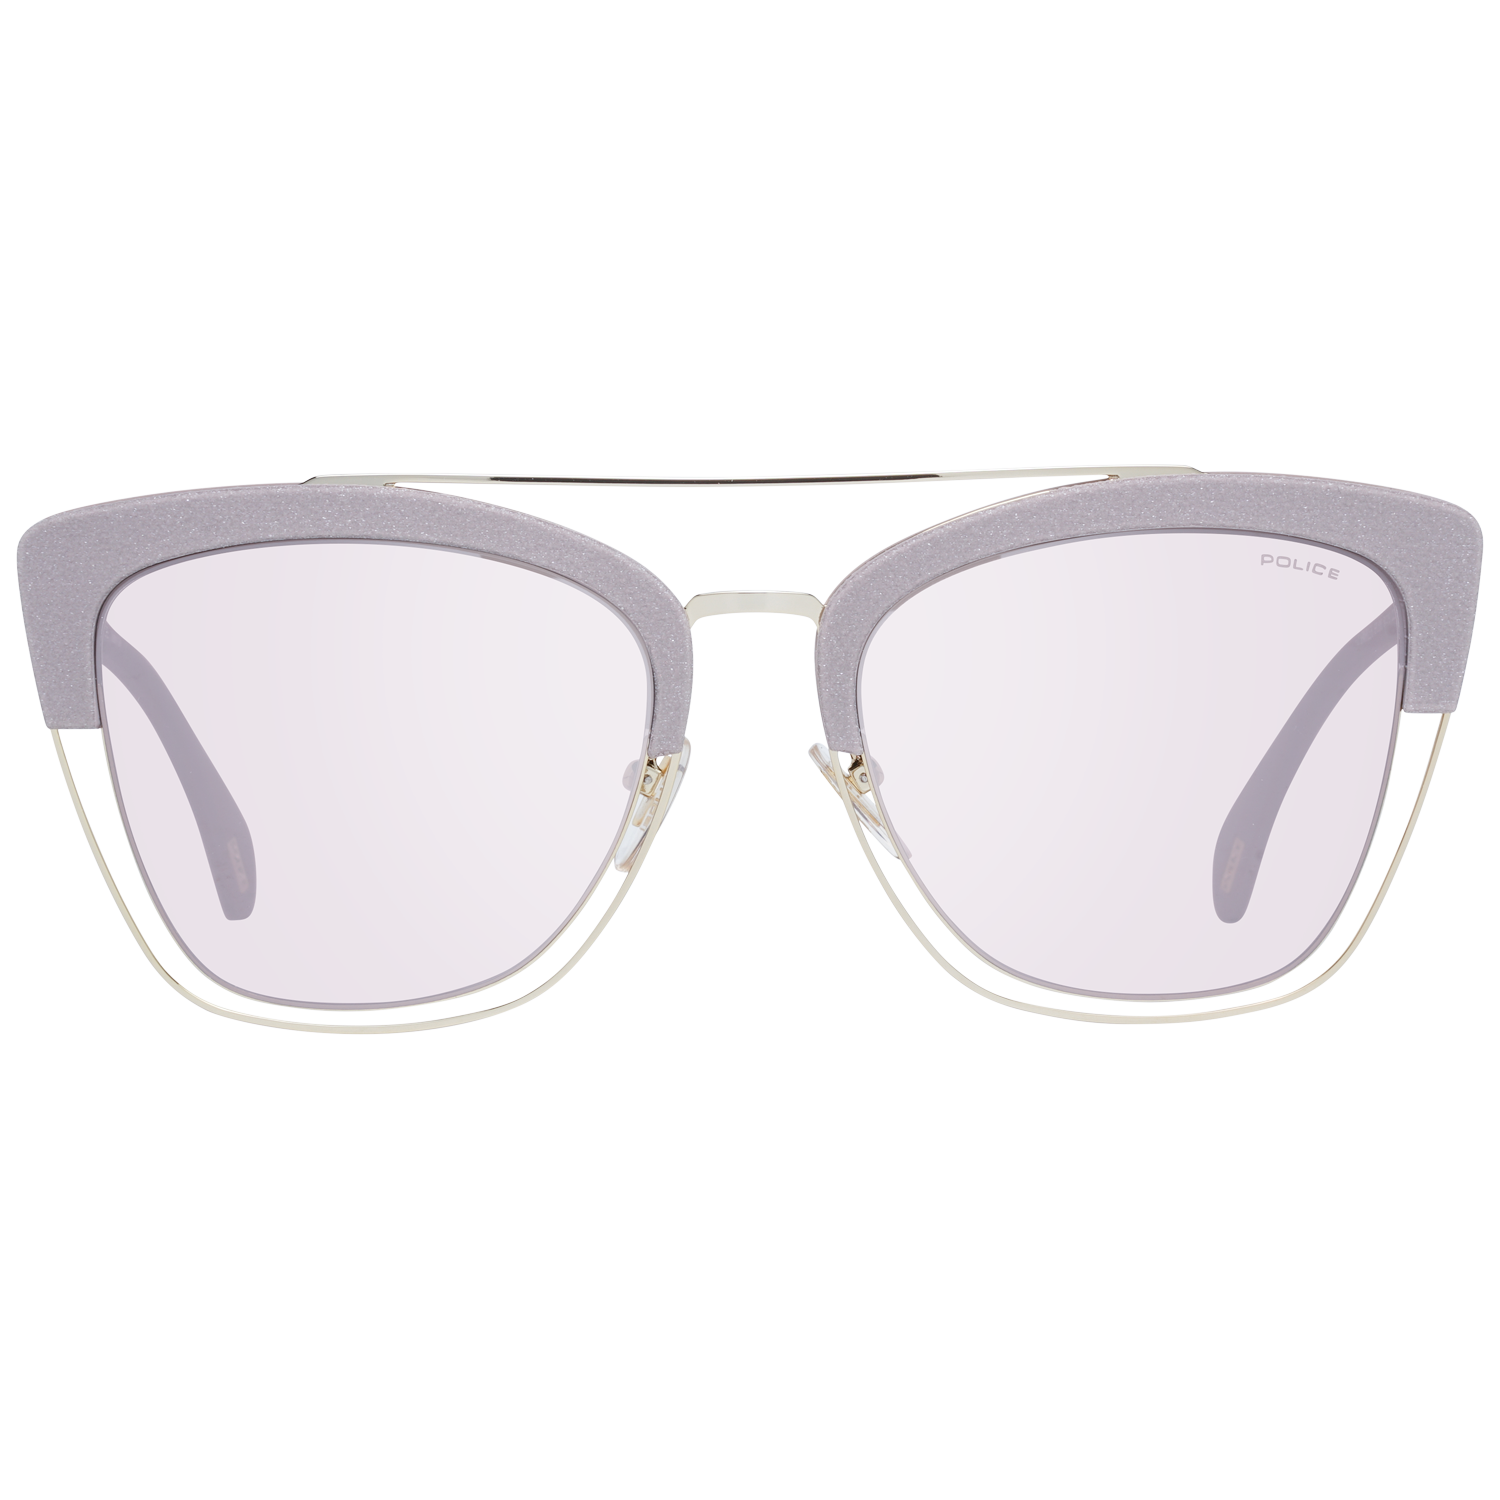 Police Sunglasses Police Sunglasses Women' s SPL618 300X 54 Eyeglasses Eyewear UK USA Australia 